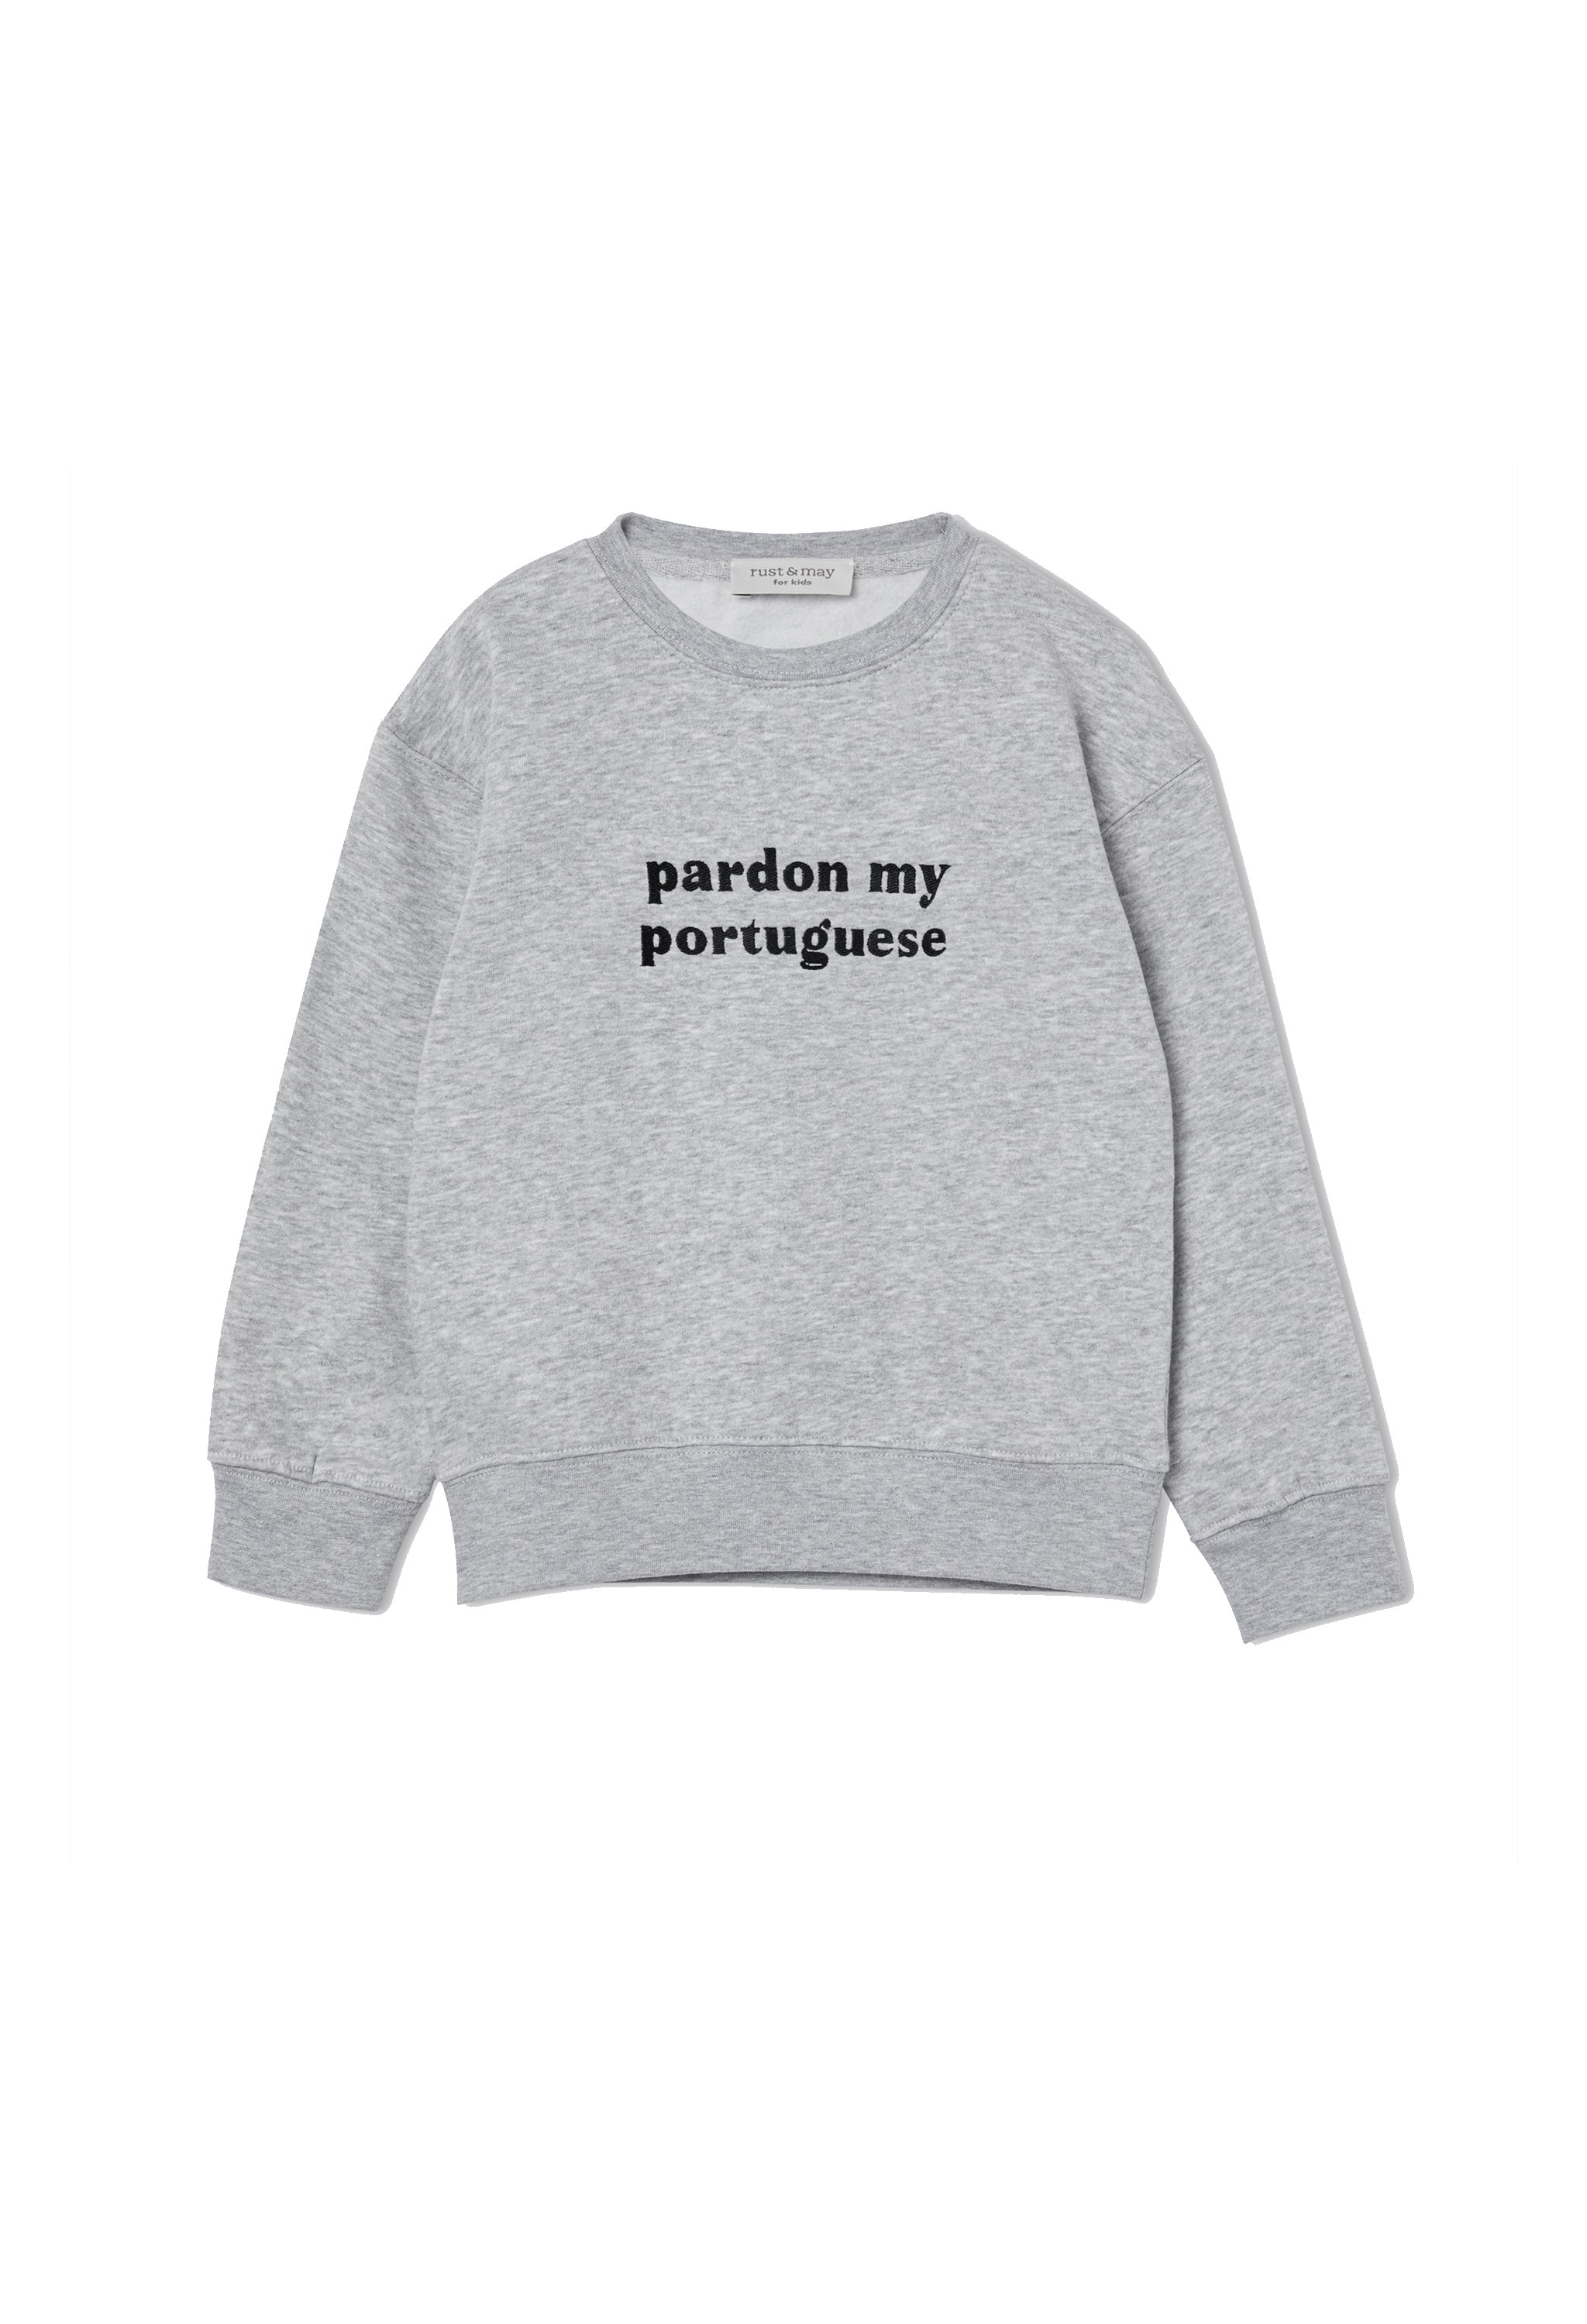 Pardon my Portuguese Sweatshirt (Kids)